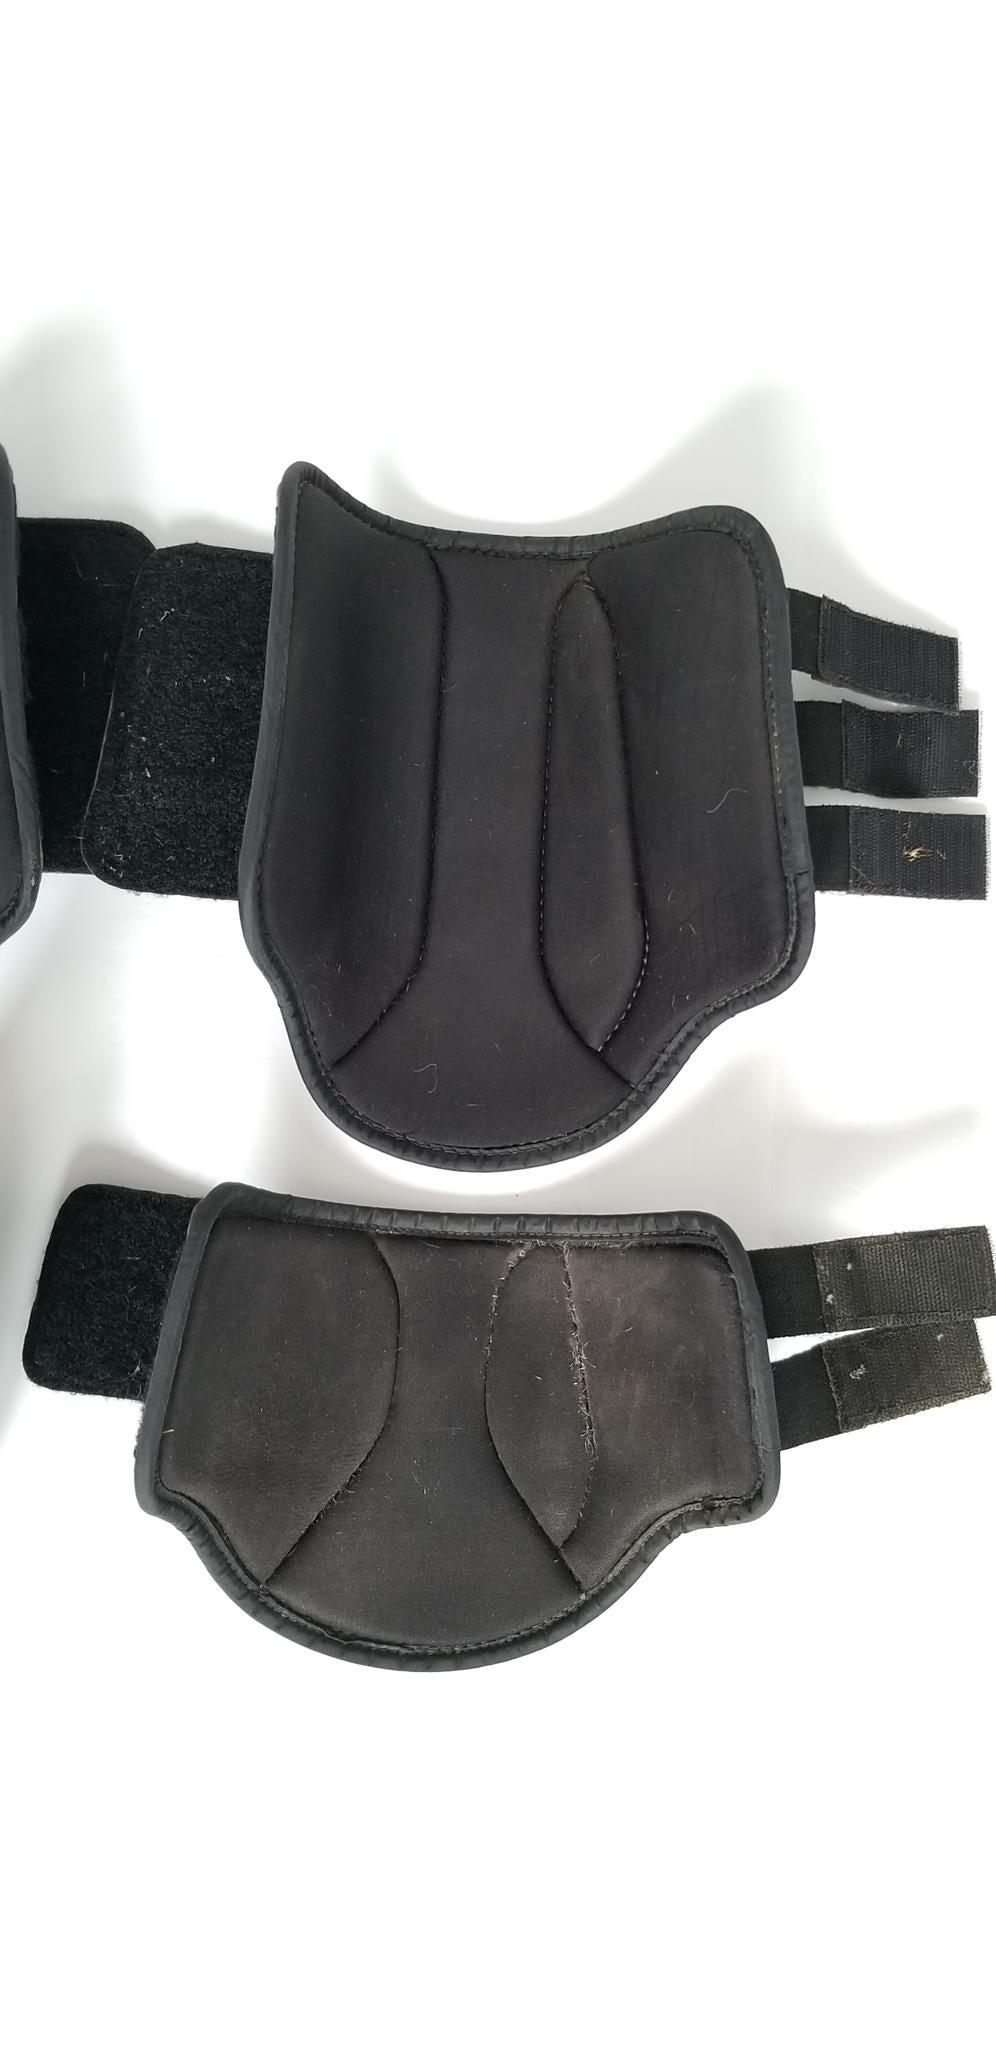 EquiFit MultiTeq Front and Short Hind Boots (Full Set) - Black - Large